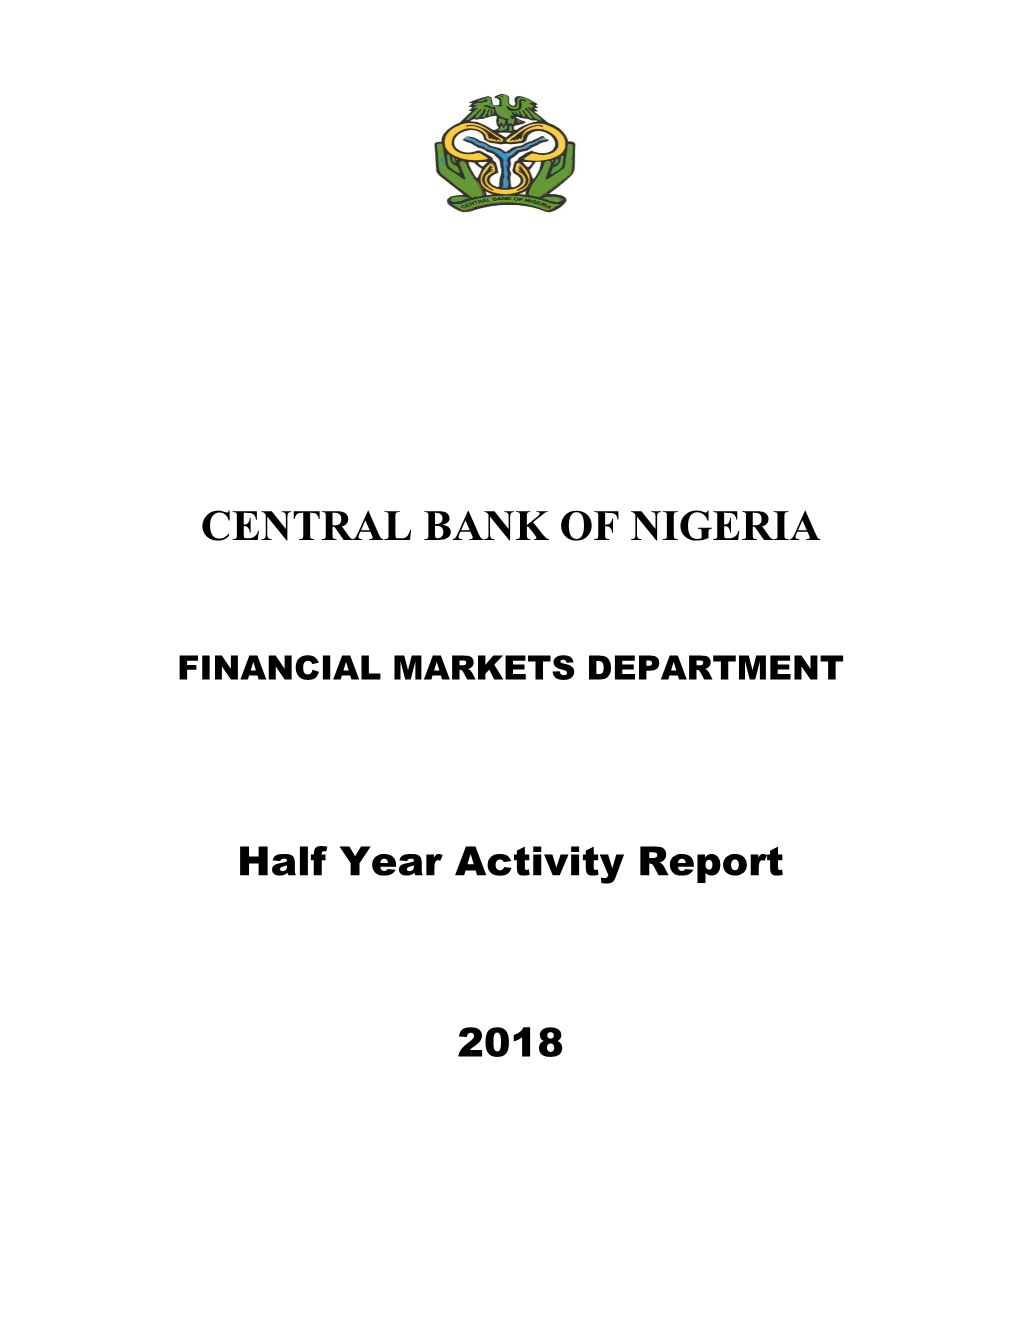 Half Year Activity Report 2018